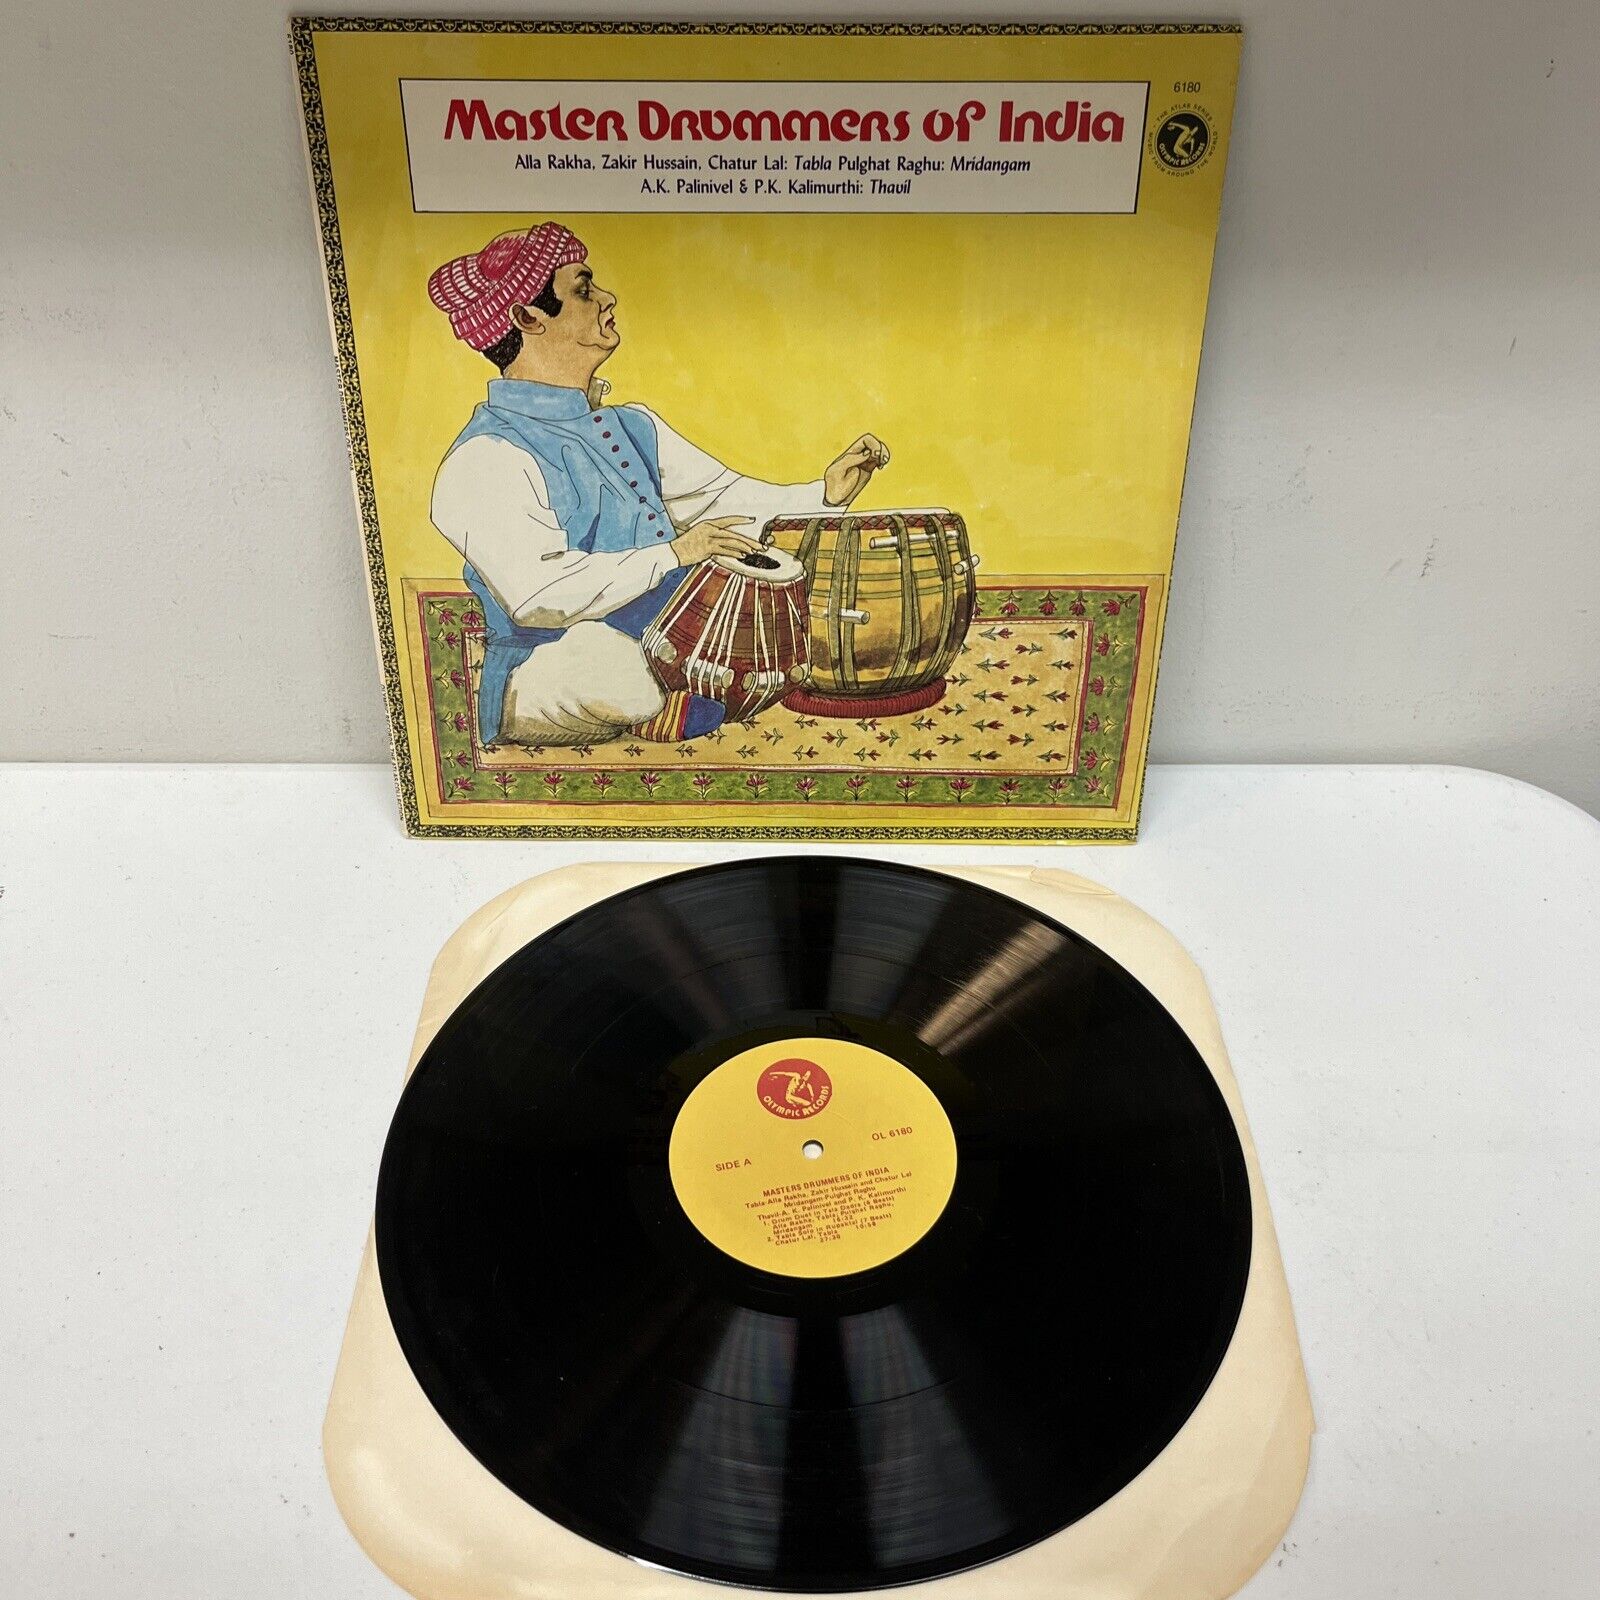 Master Drummers of India Music Lp Vinyl Record 6180 Alla Rakha Zakir Hussain VG+